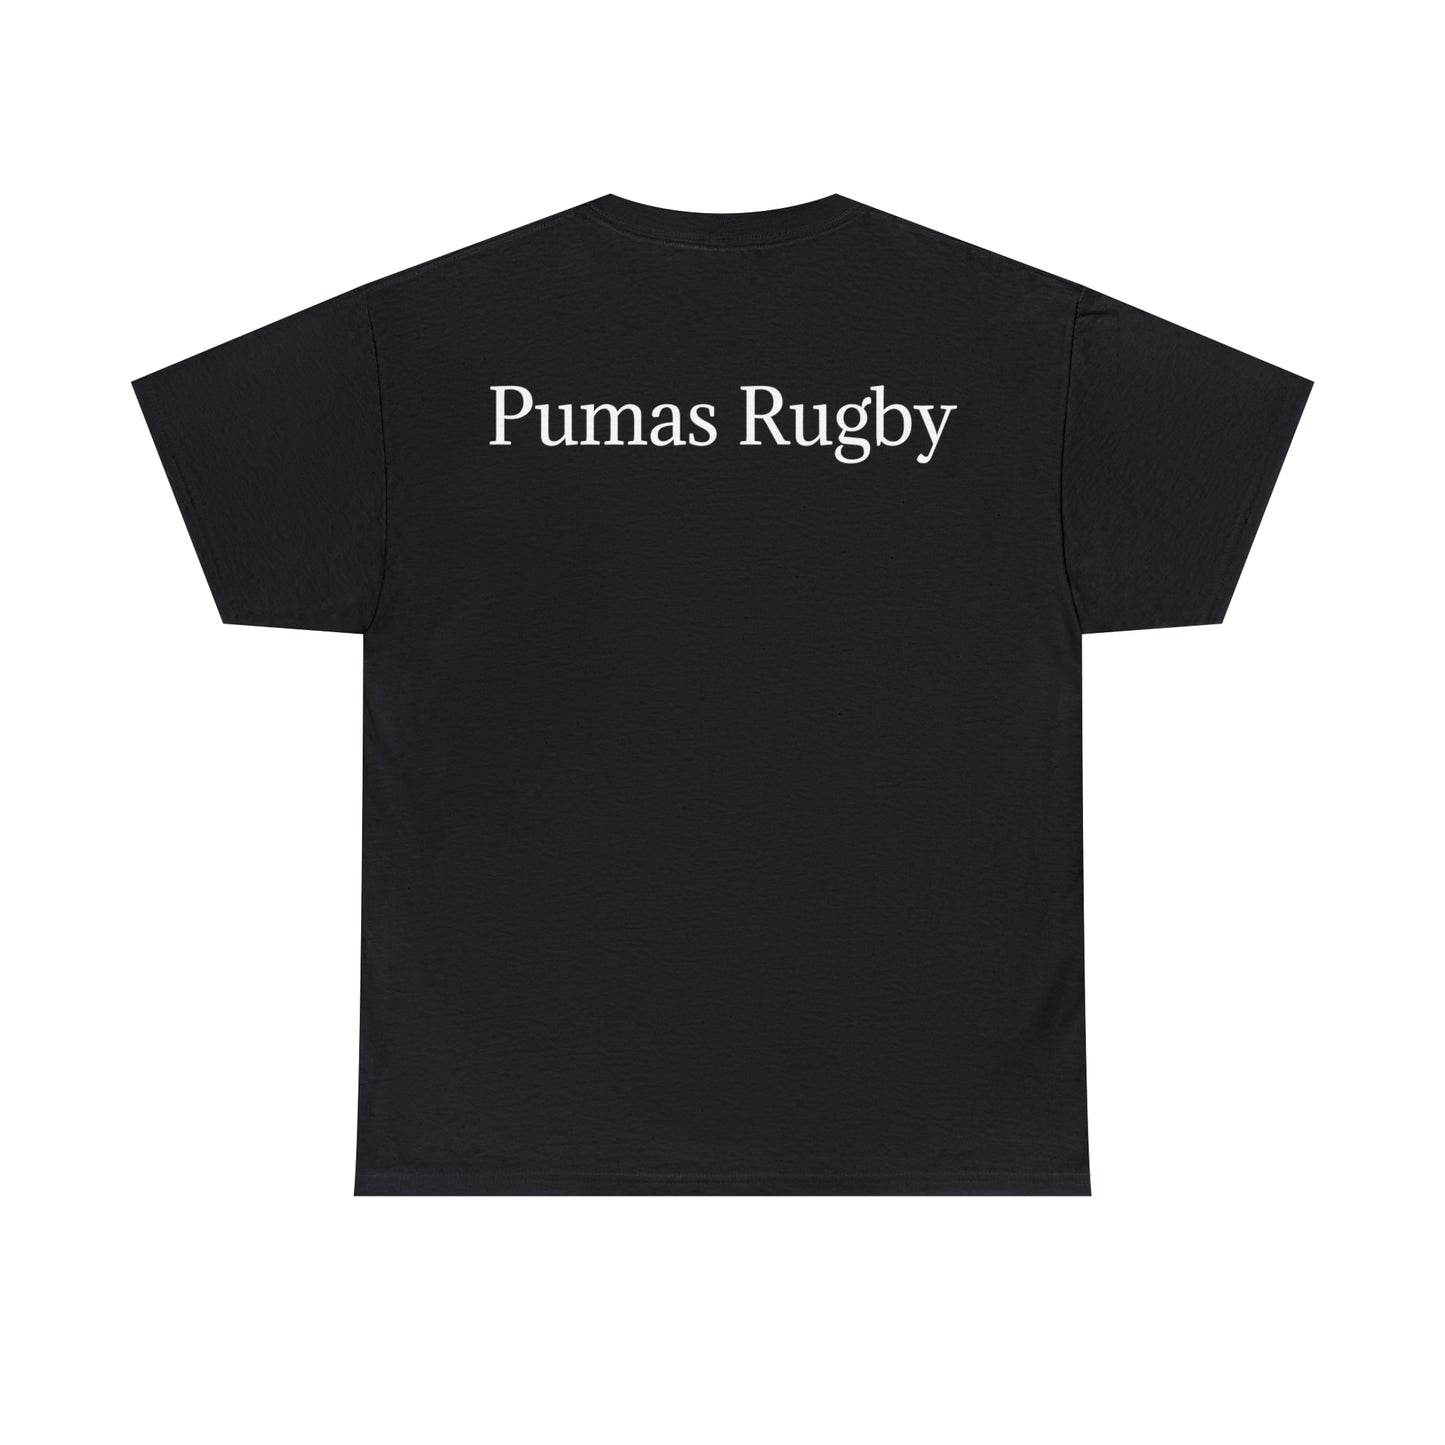 Rugby Maradona - dark shirt